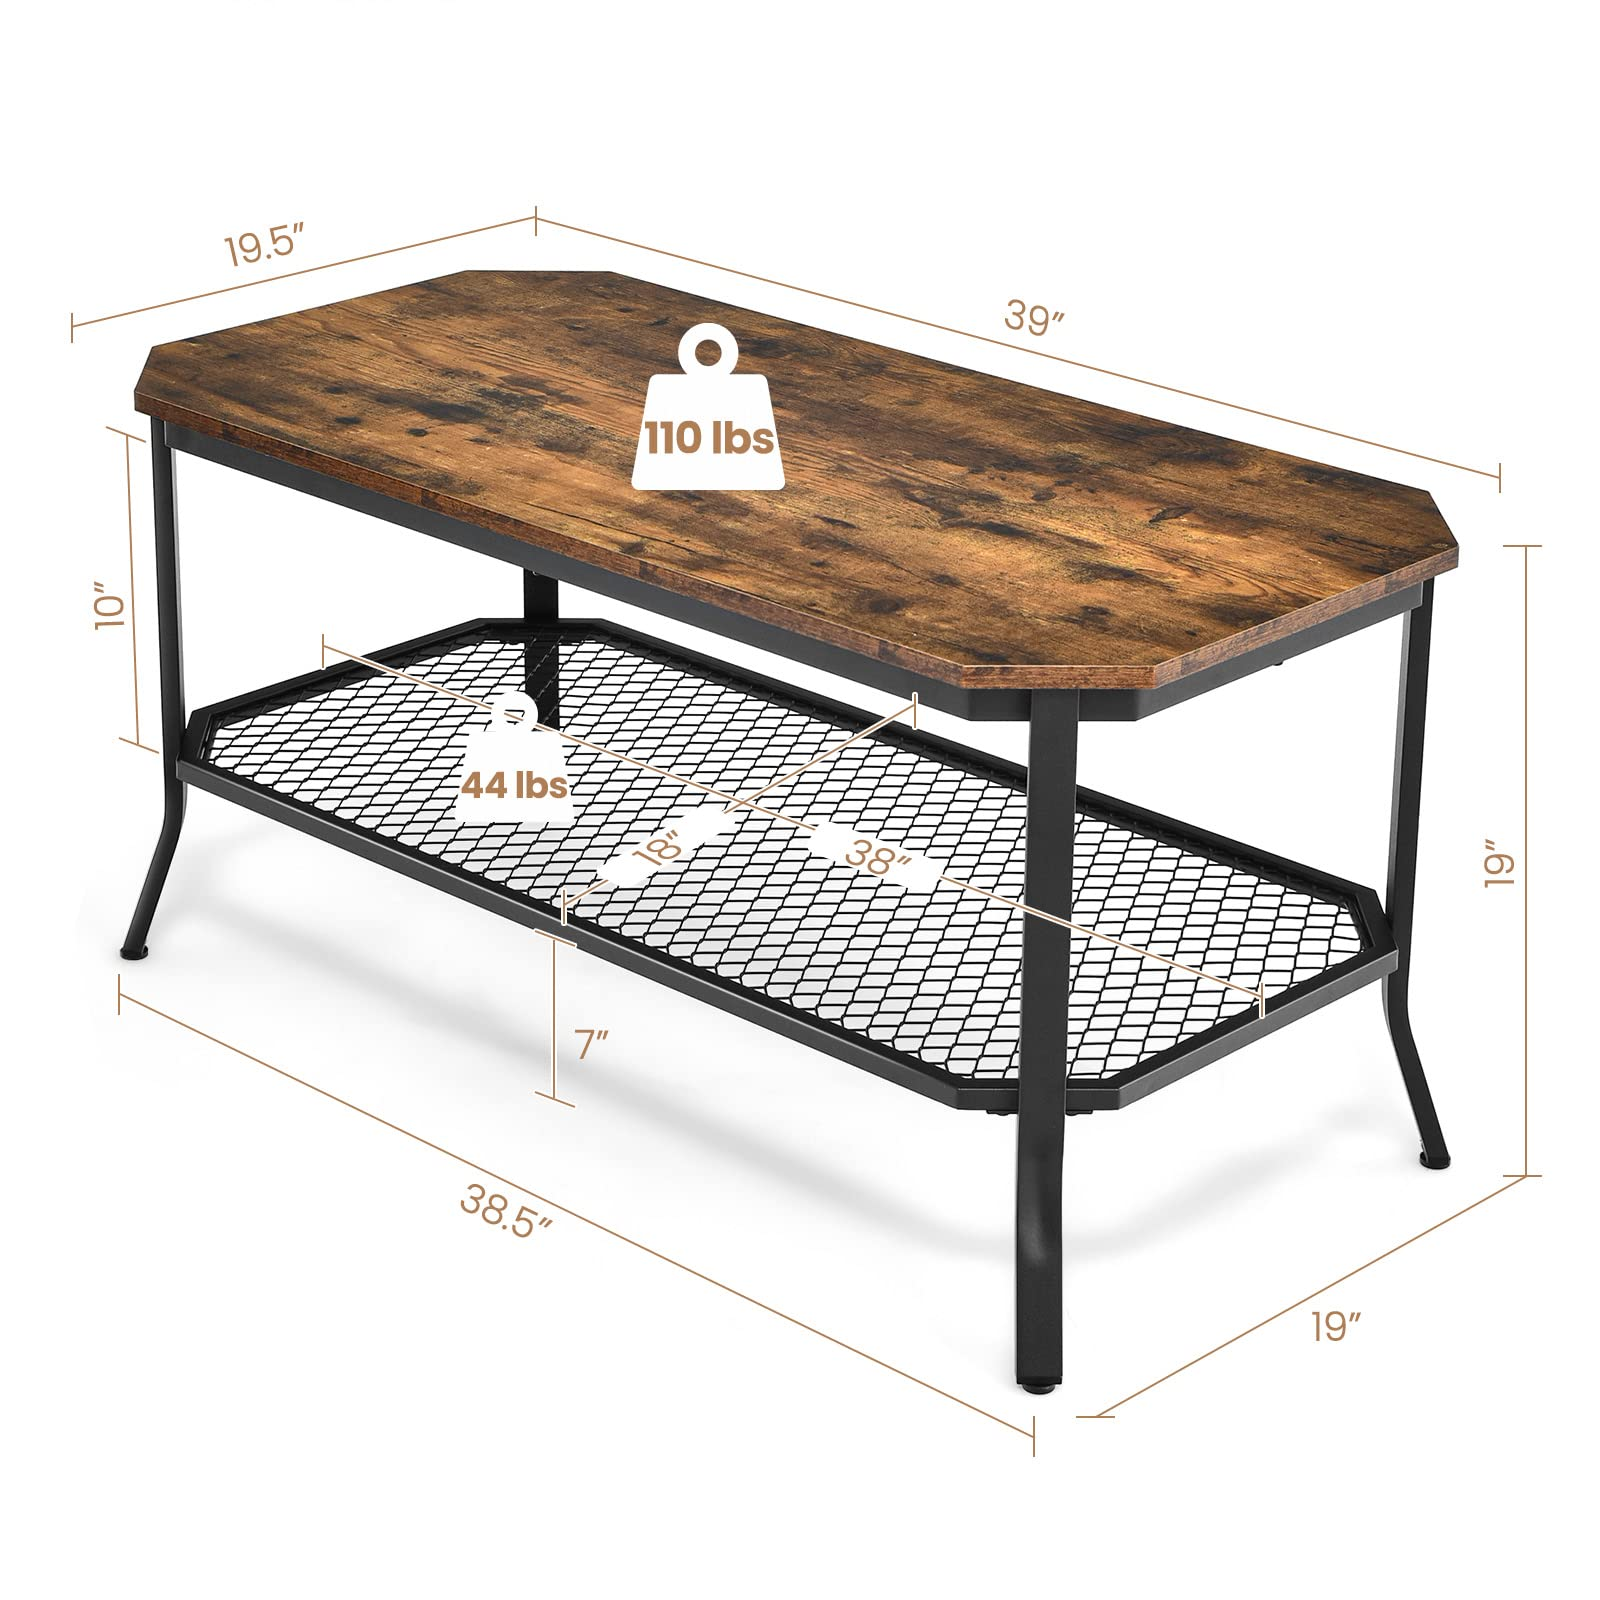 Giantex Coffee Table, Industrial 2-Tier Table